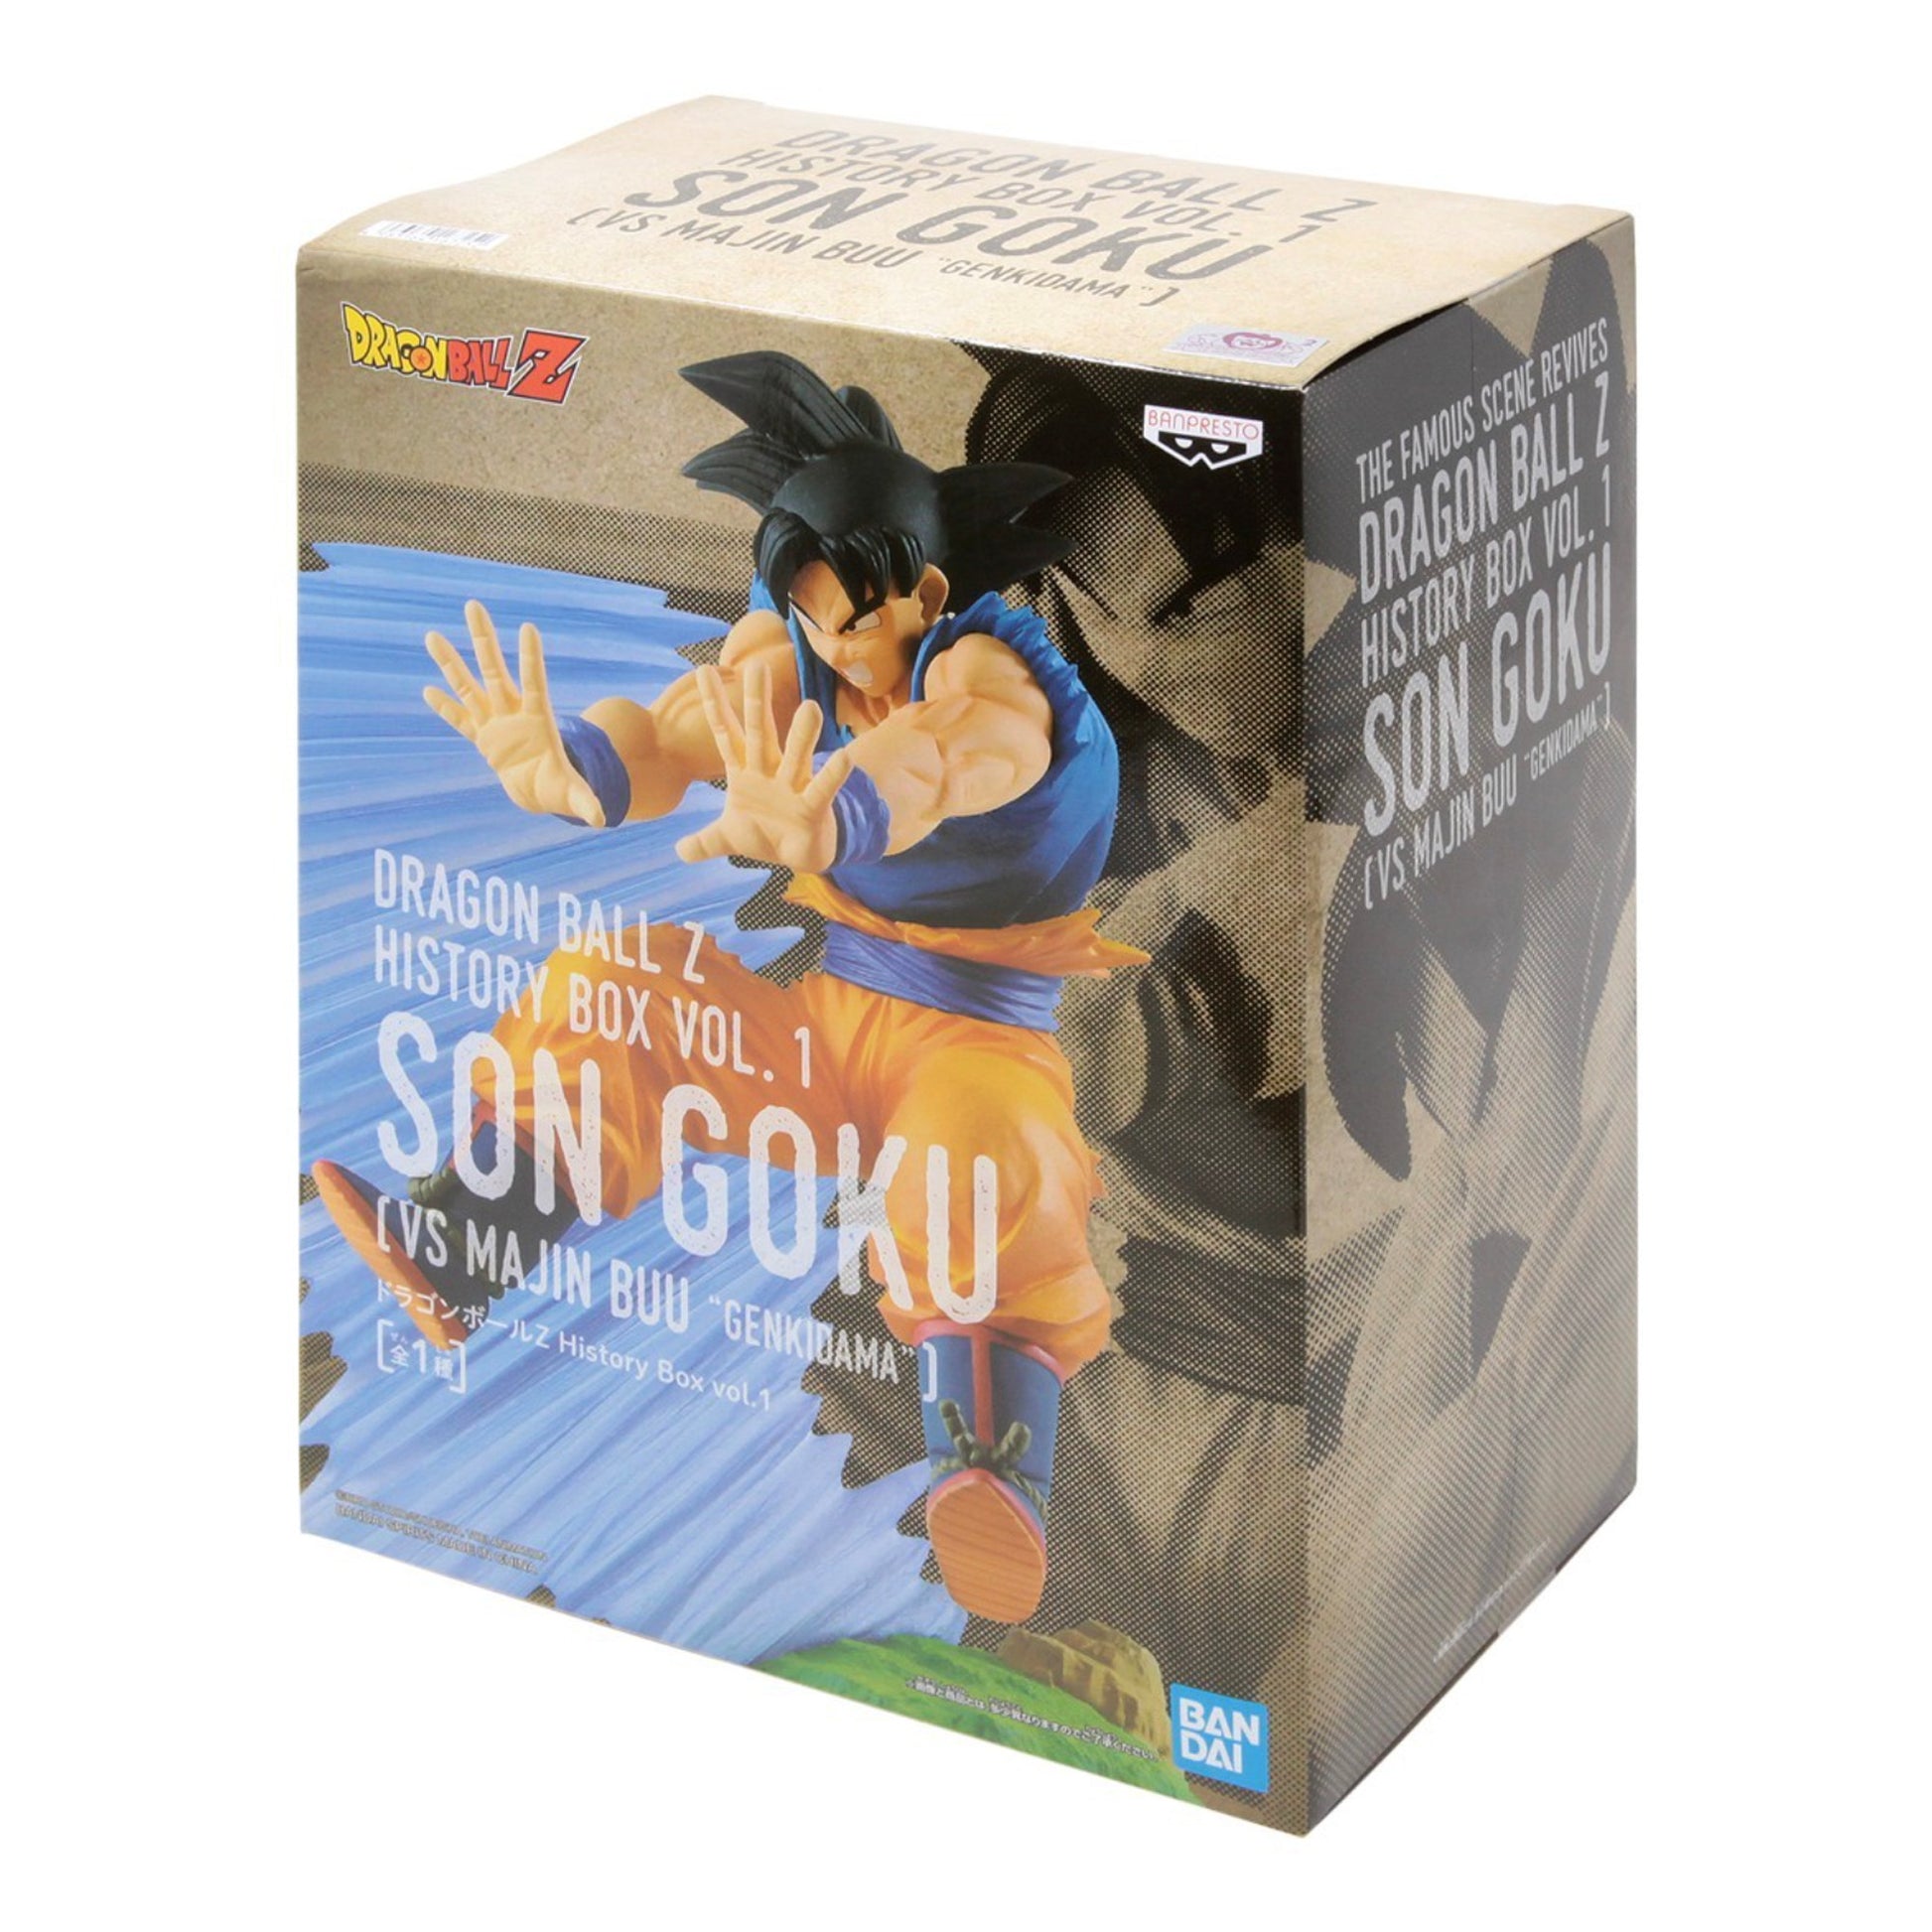 Boneco Dragon Ball Z Son Goku History Box Vol. 1 Bandai Banpresto